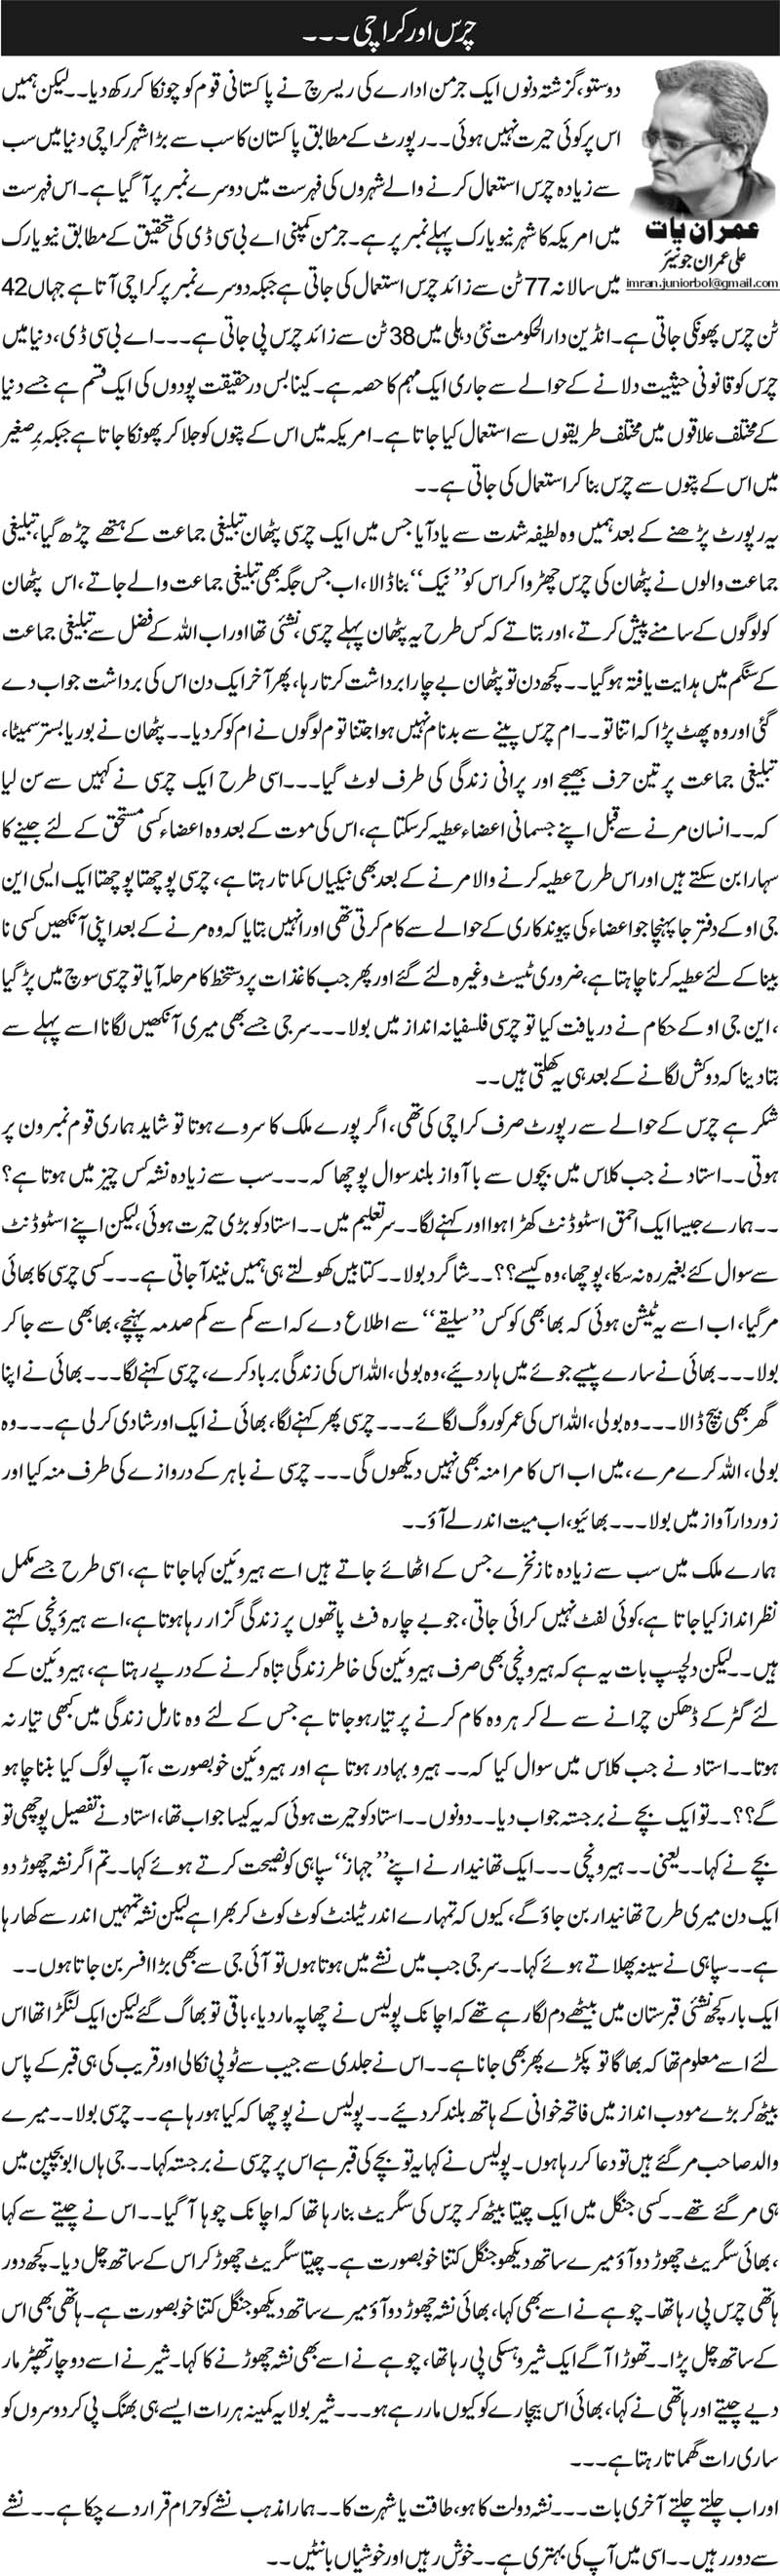 Charas Aur Karachi By Ali Imran Junior Imran Yaat Nai Baat